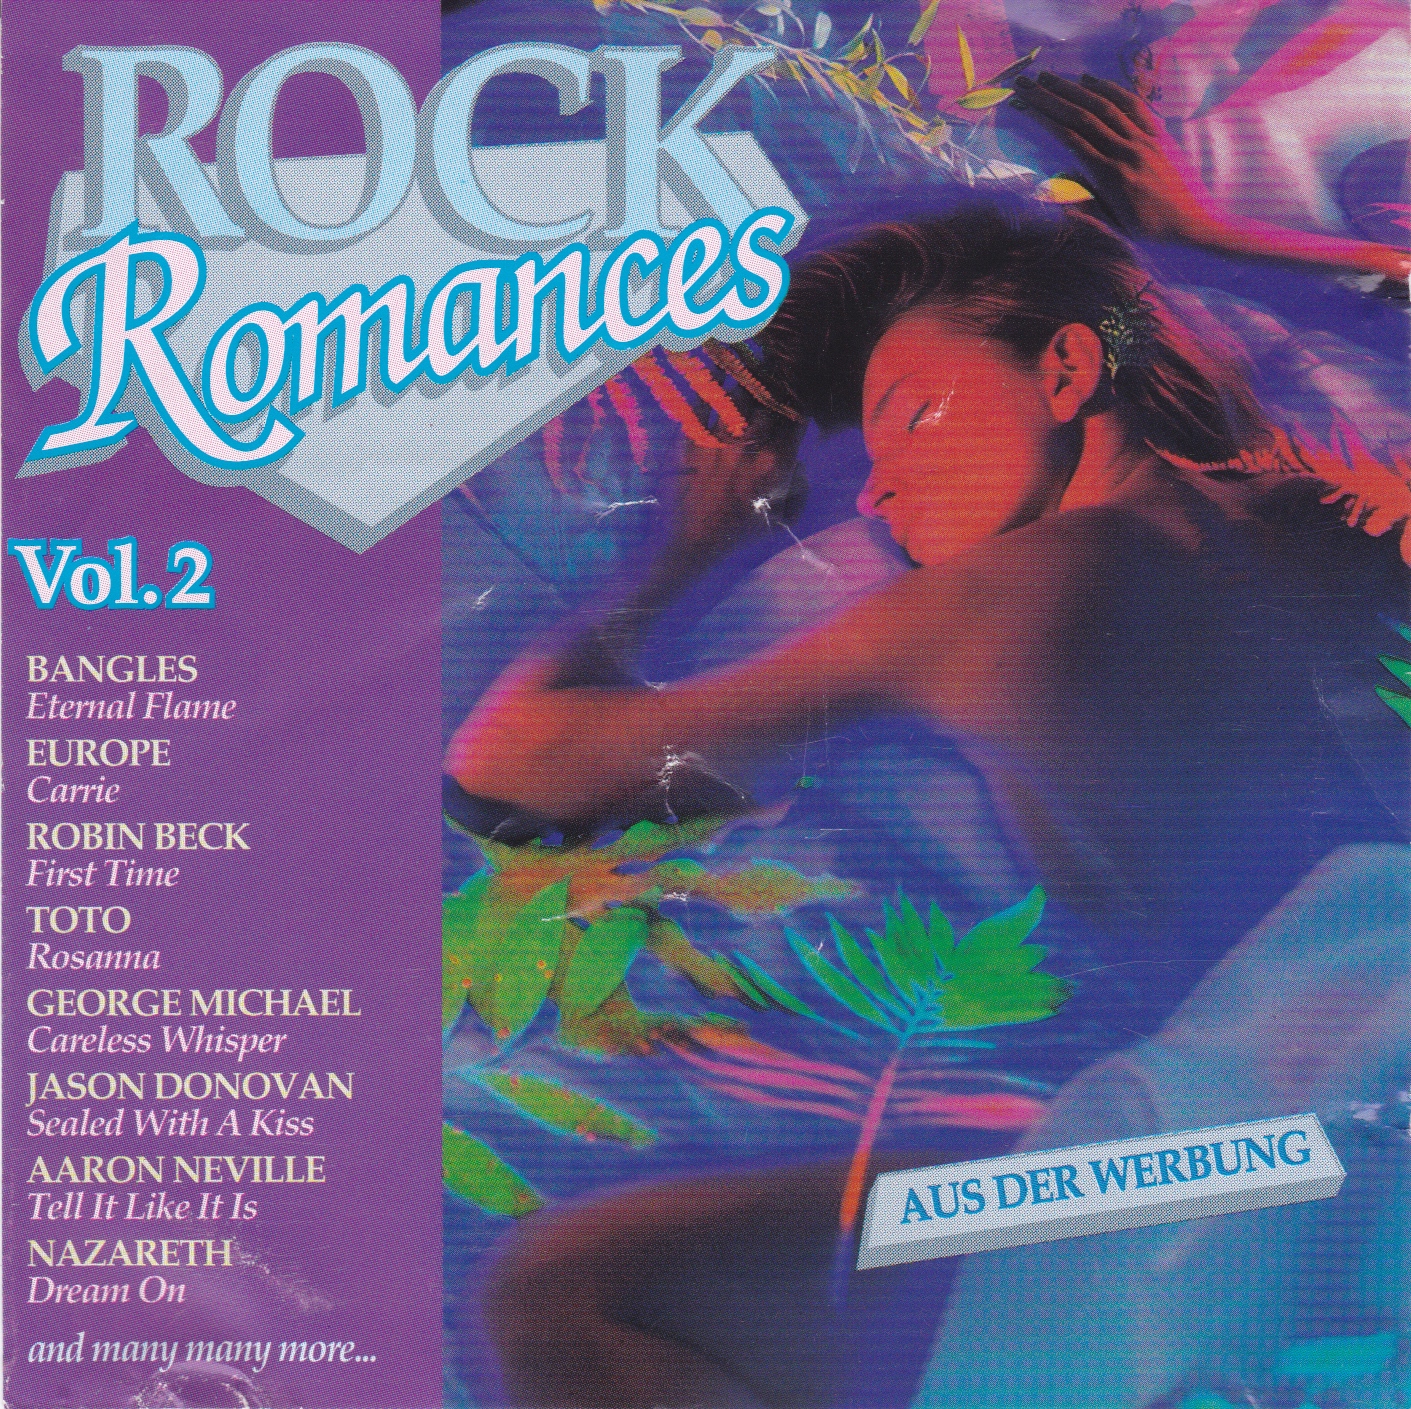 Robin Beck - first time. Rock Romances 2 CD. Romantic Rock album Cover. Europe Carrie Ноты. Cd romance